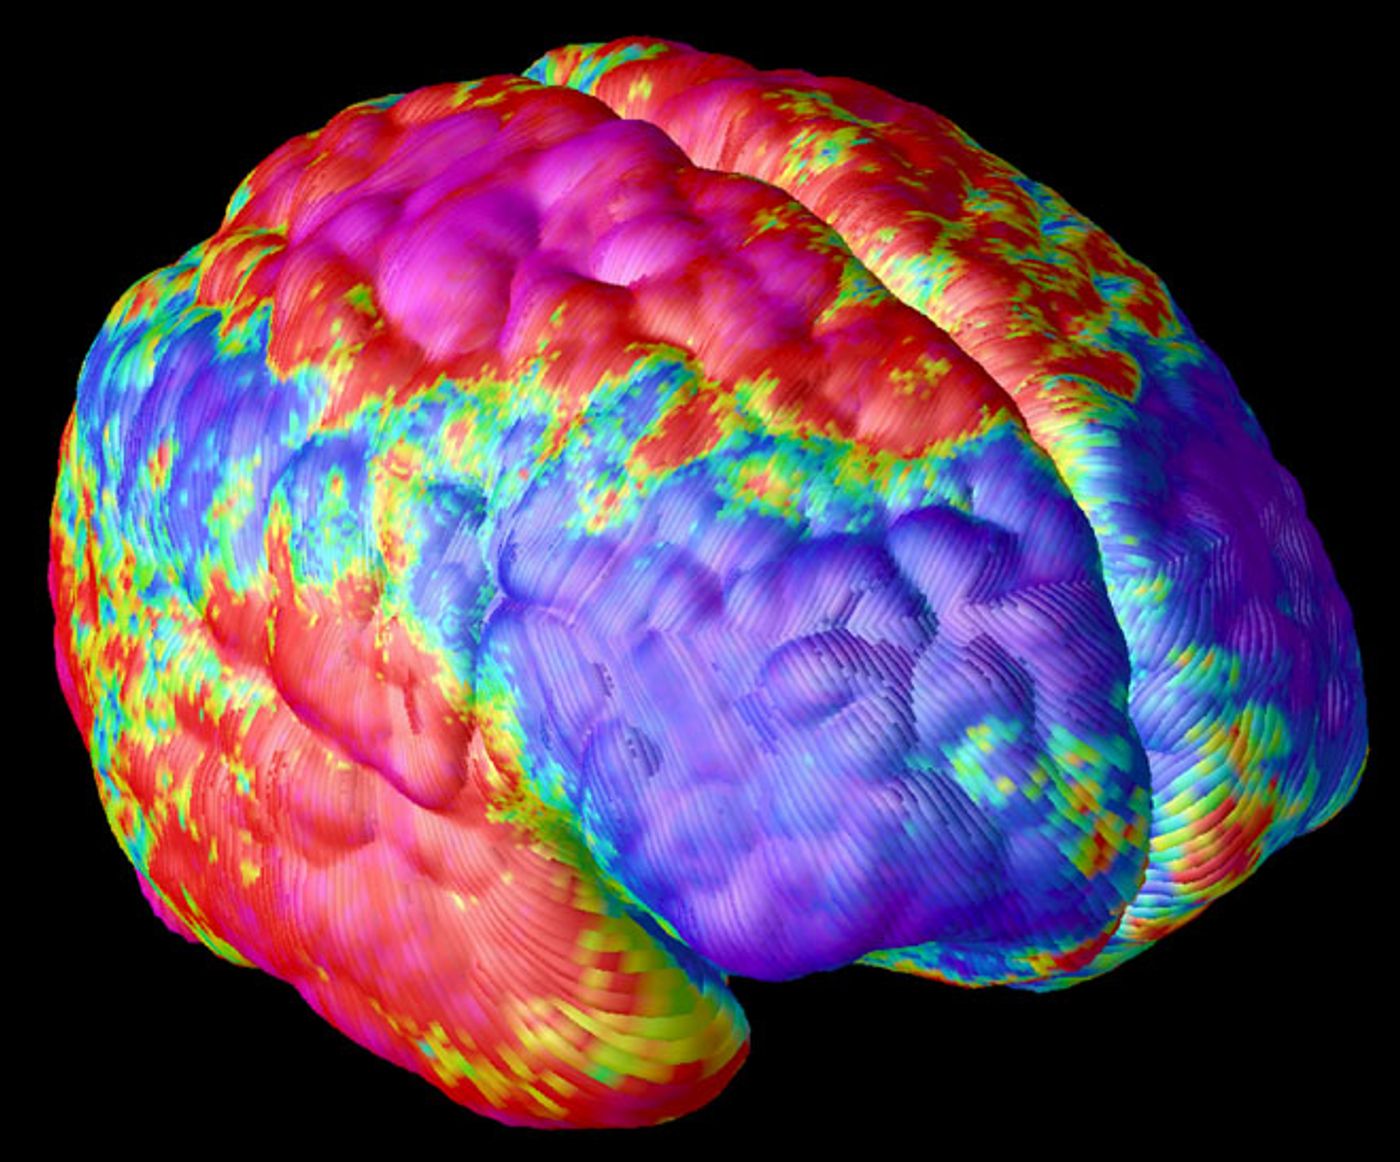 False color image of a Schizophrenic brain. / Credit: NIMH